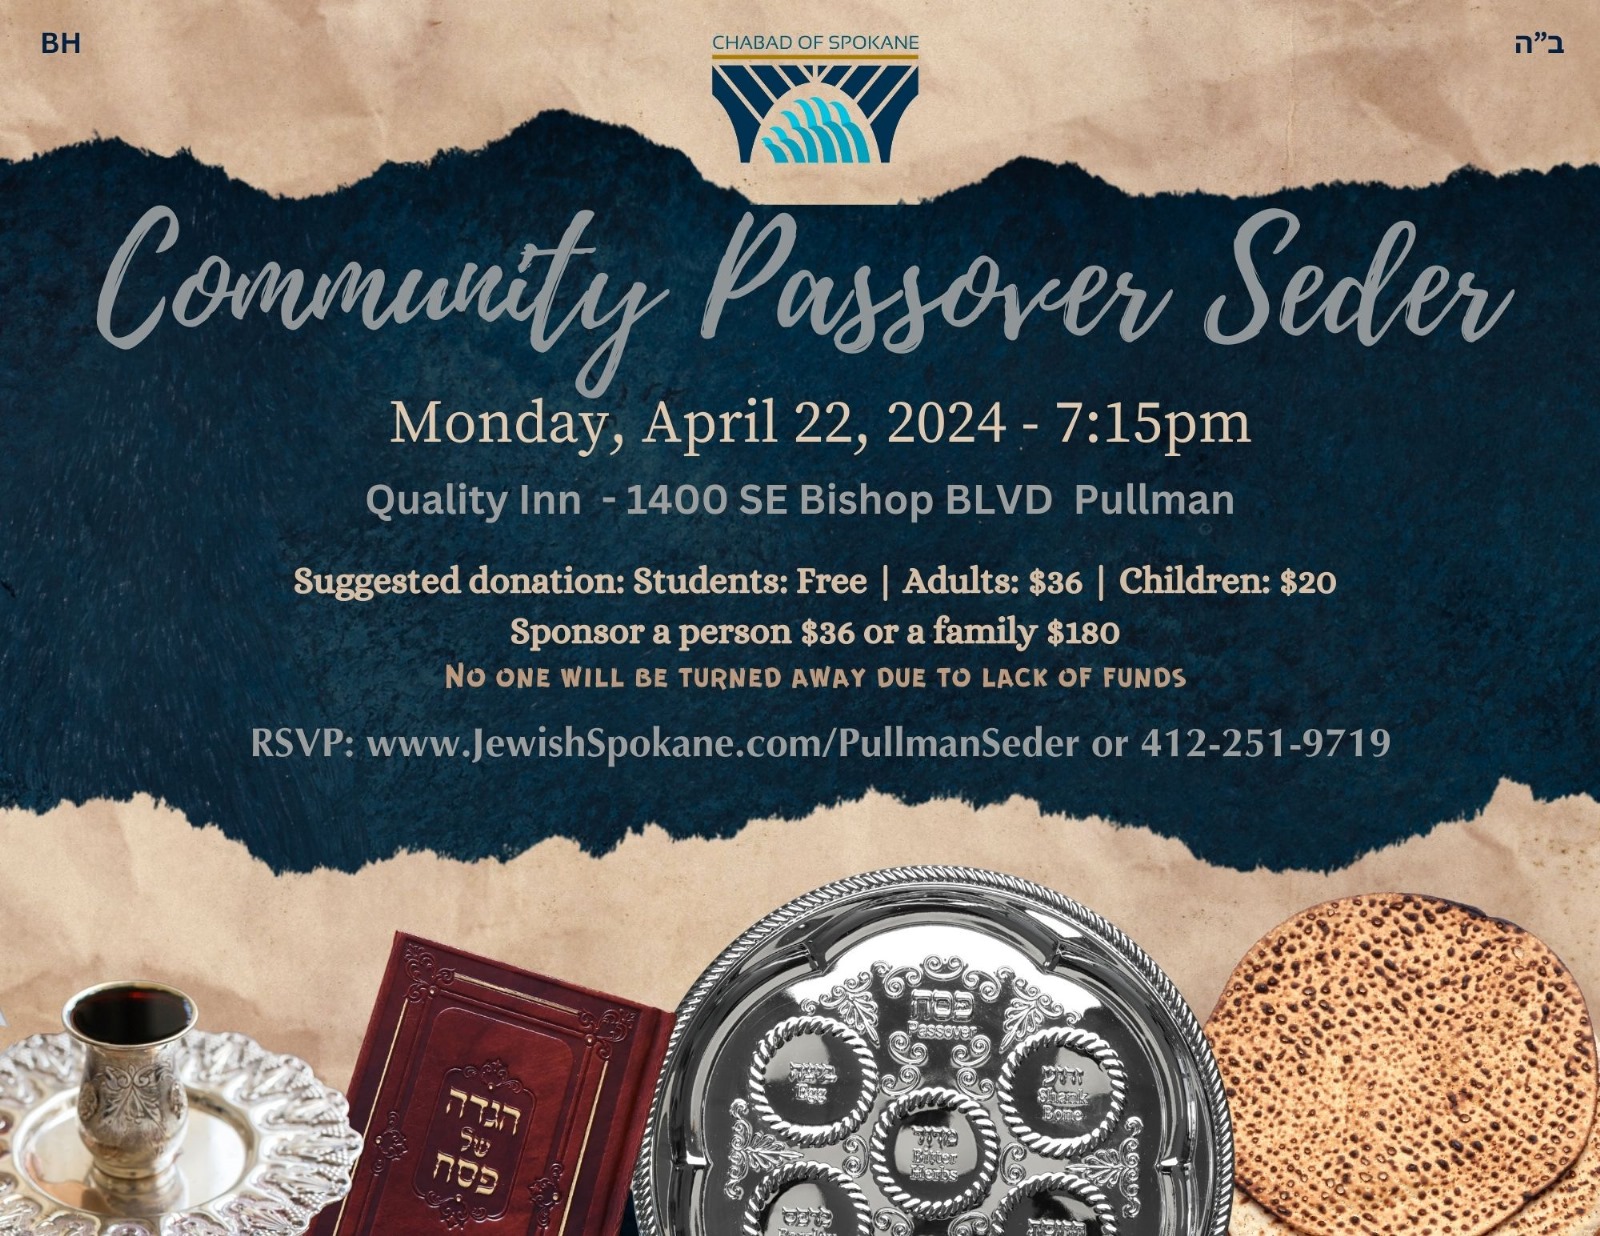 Community Passover Seder ad